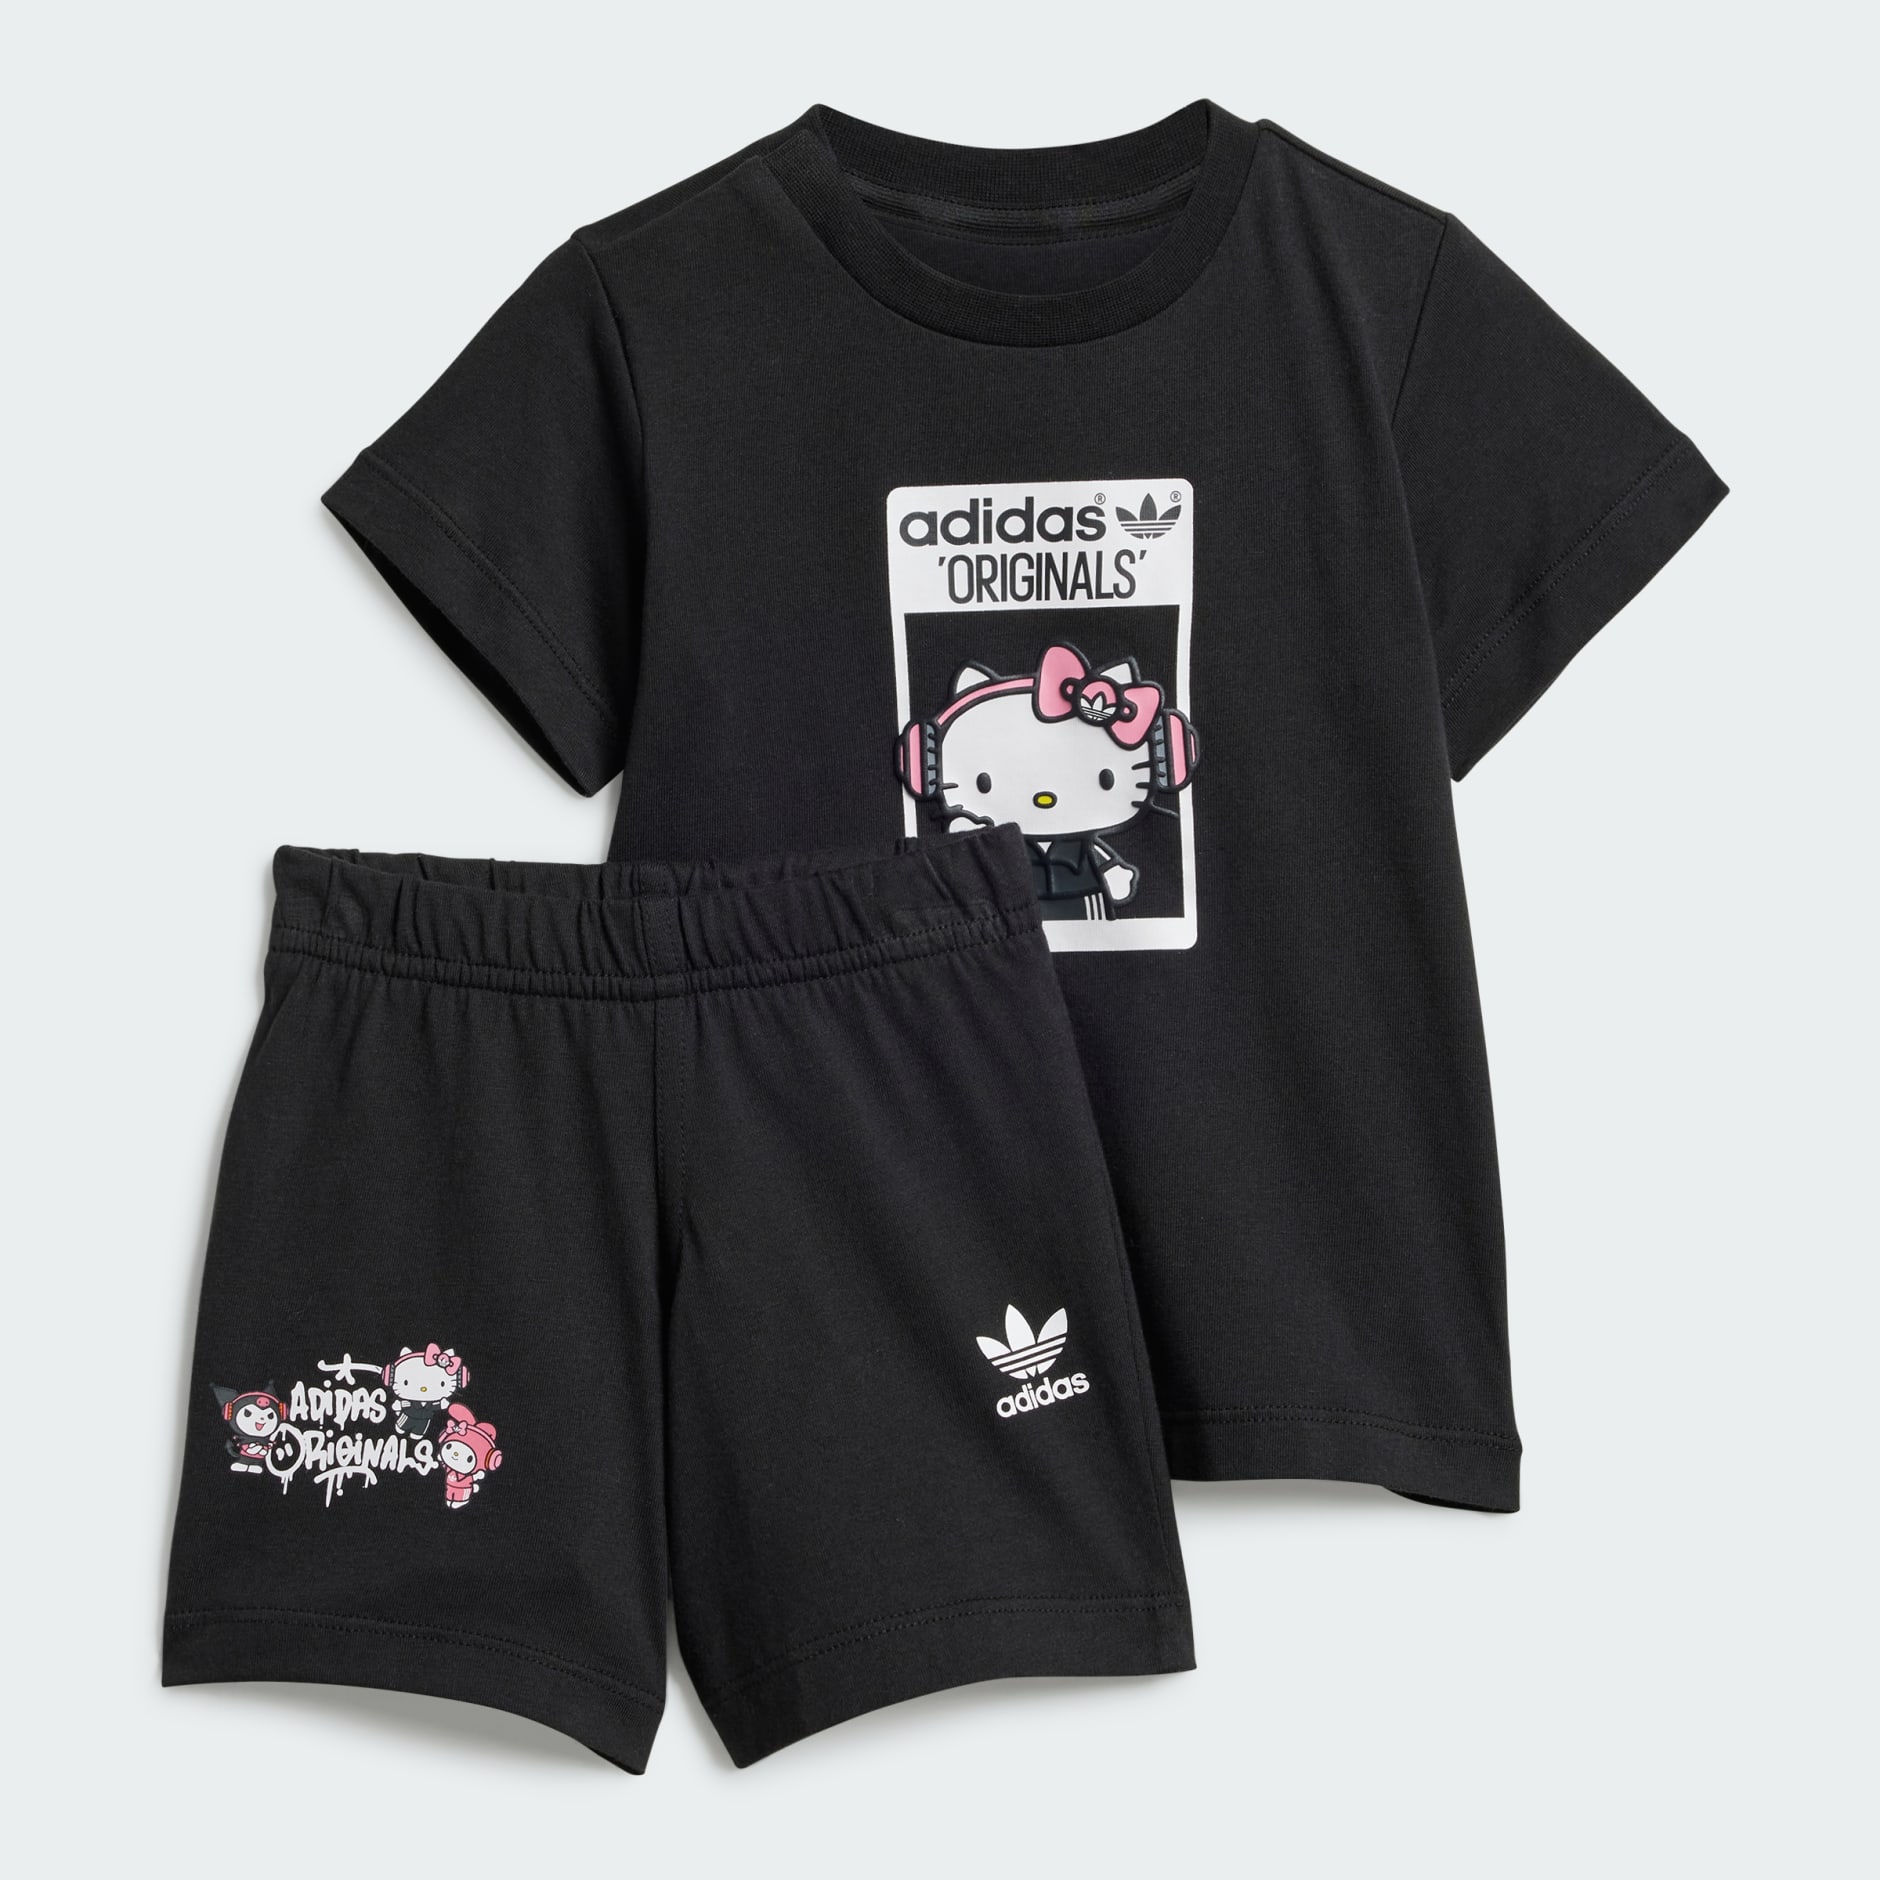 adidas adidas Originals x Hello Kitty Short Tee Set - Black